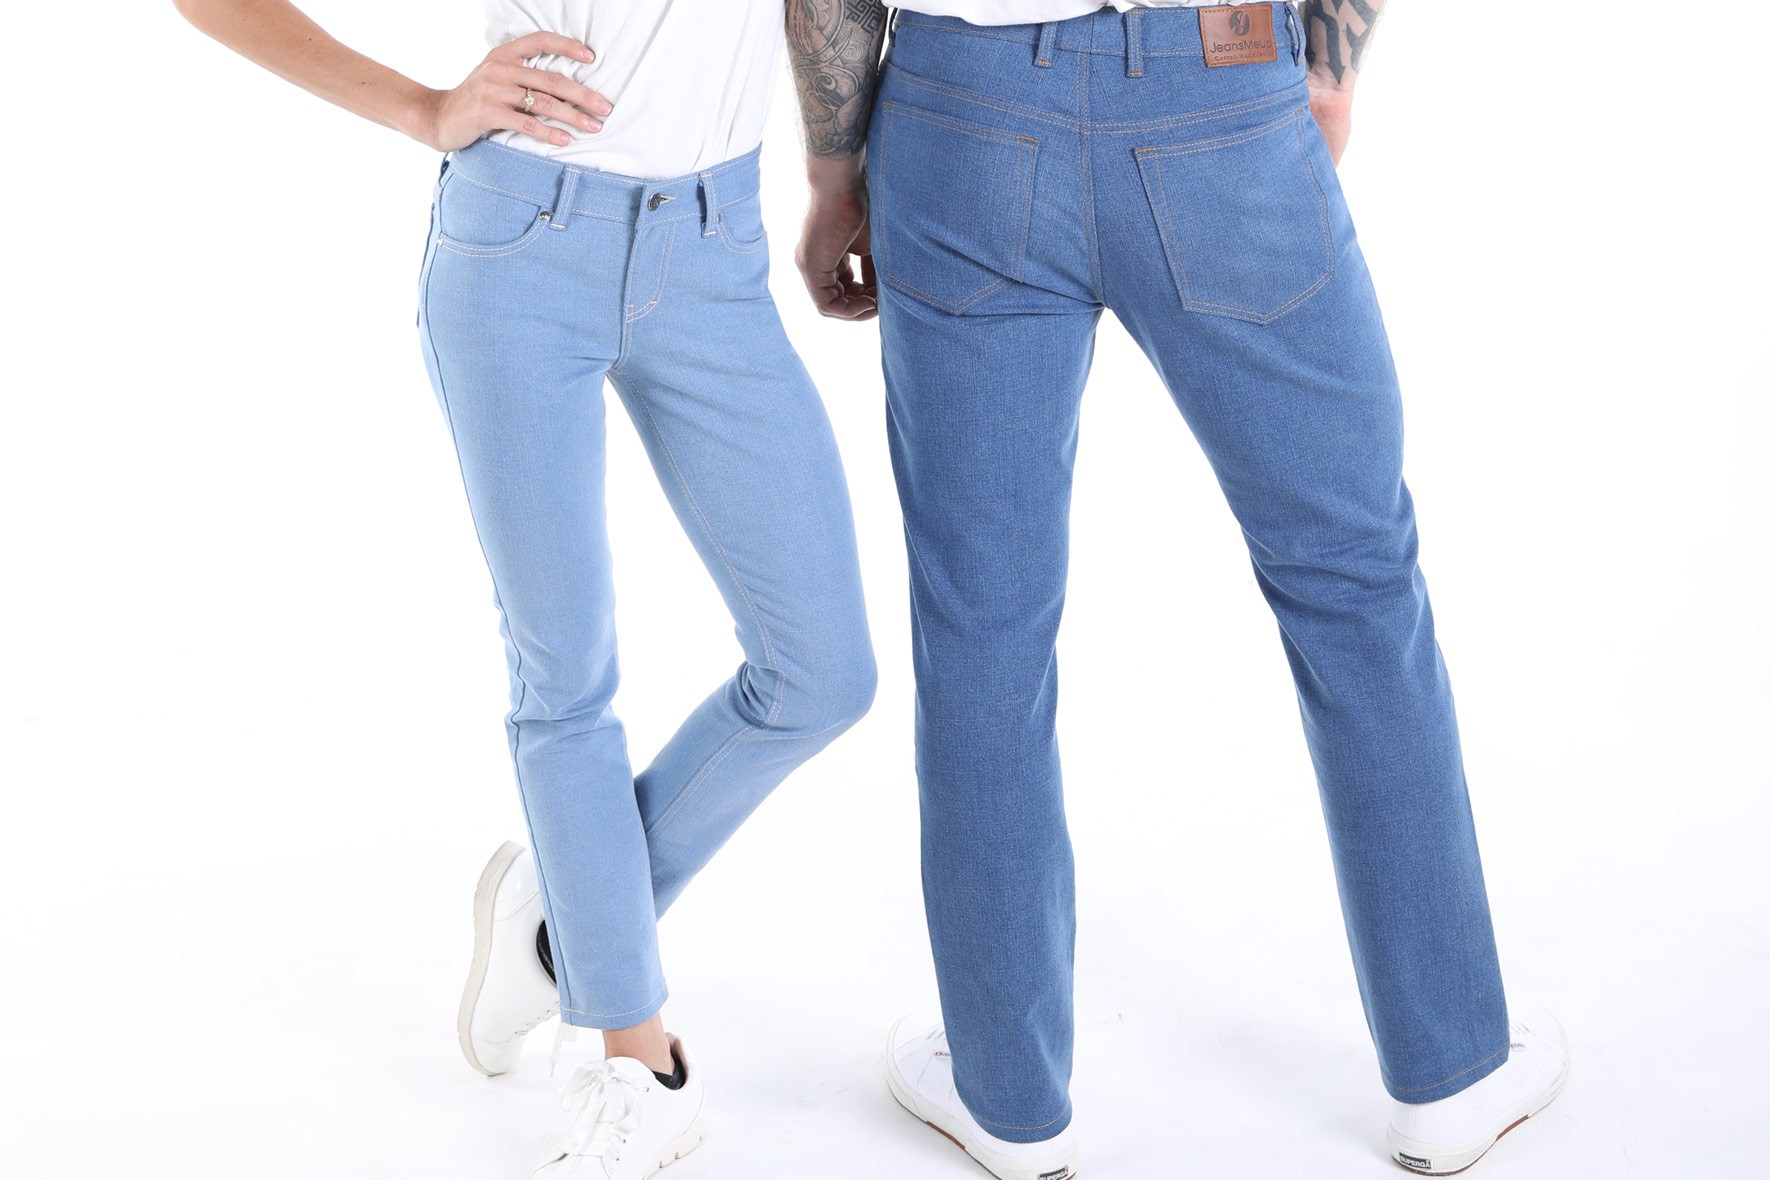 Helle Jeans Damen & Herren - Wie helle Jeans kombinieren?